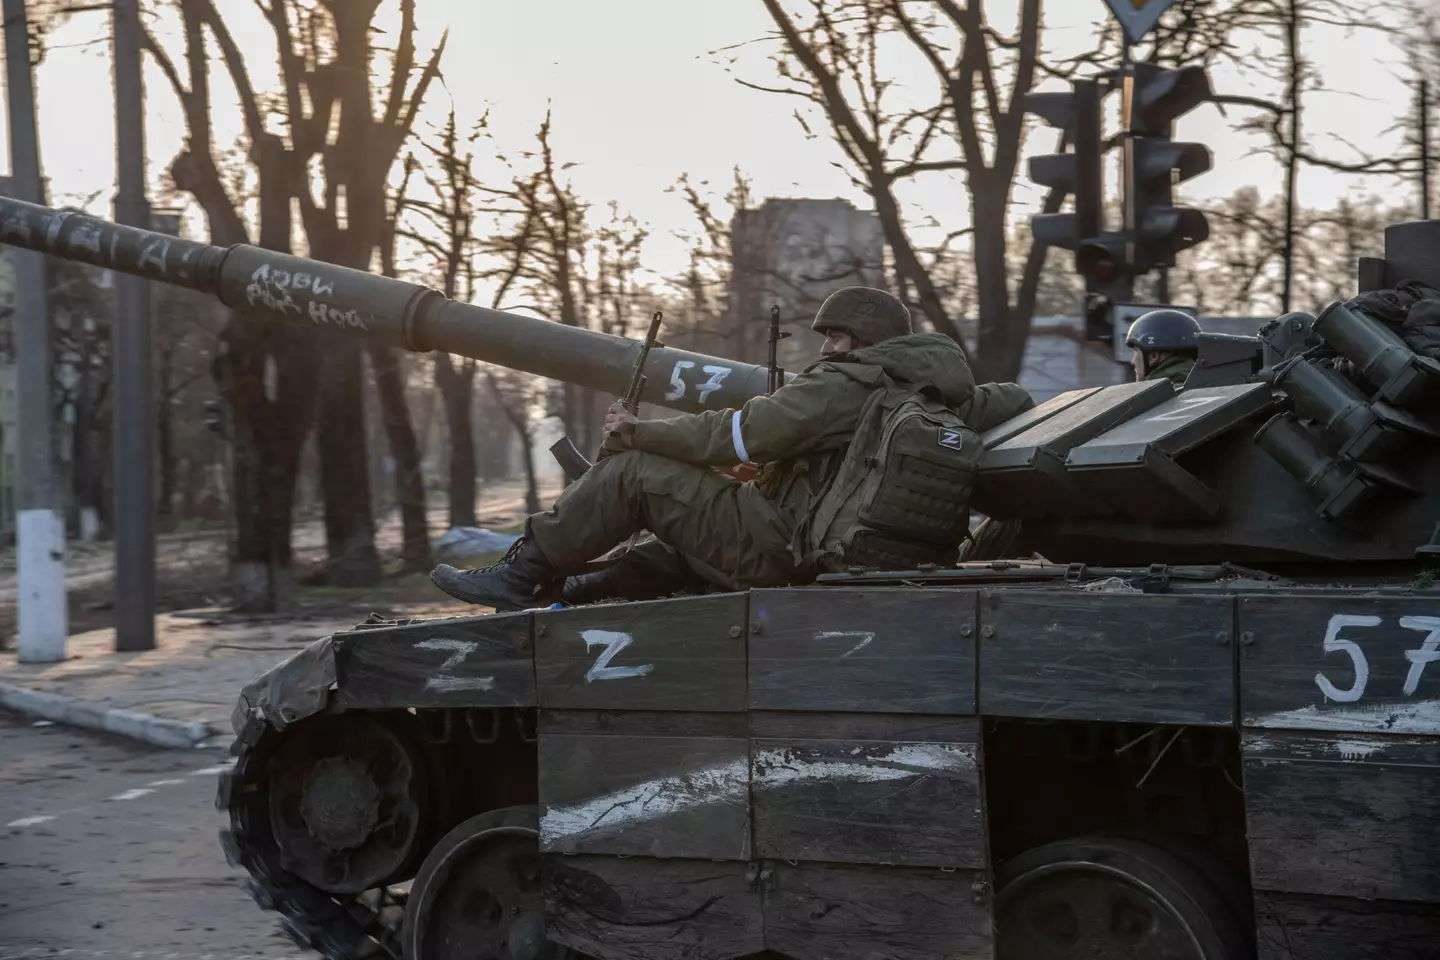 Russian soliders on a tank in Ukraine.